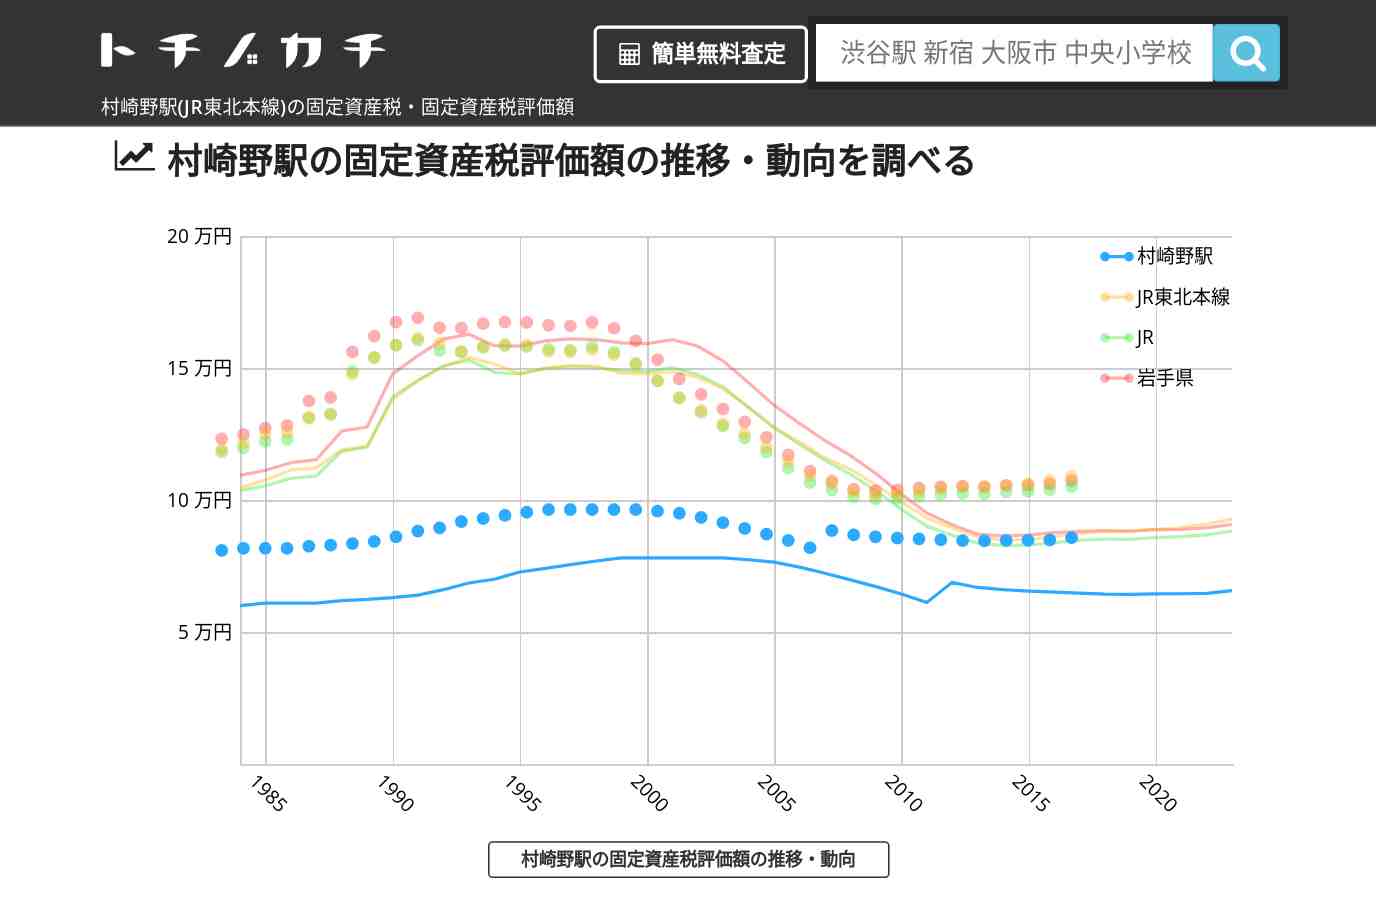 村崎野駅(JR東北本線)の固定資産税・固定資産税評価額 | トチノカチ